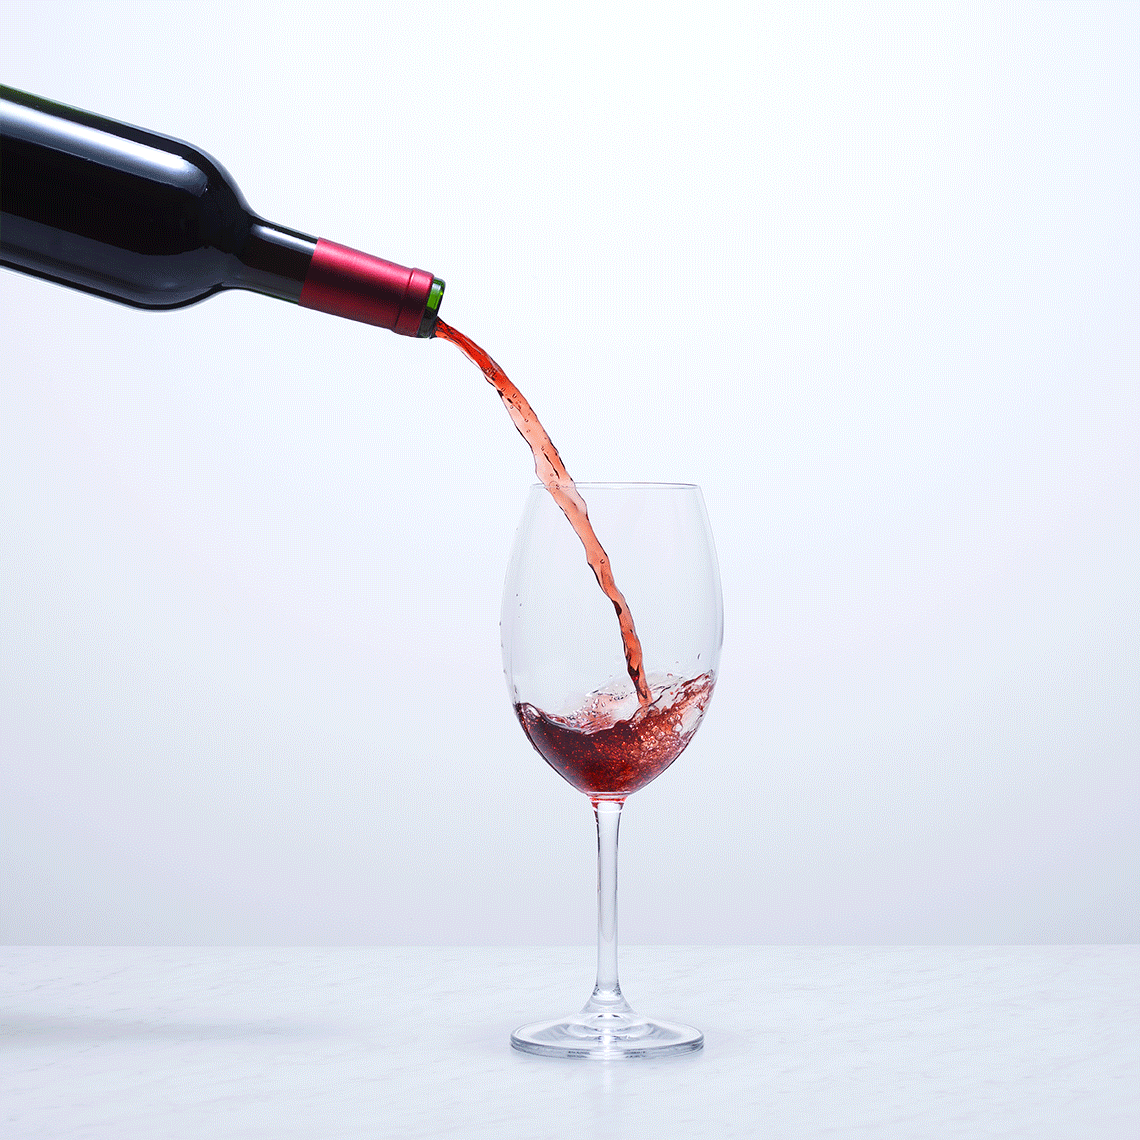 Wine Glass overfill